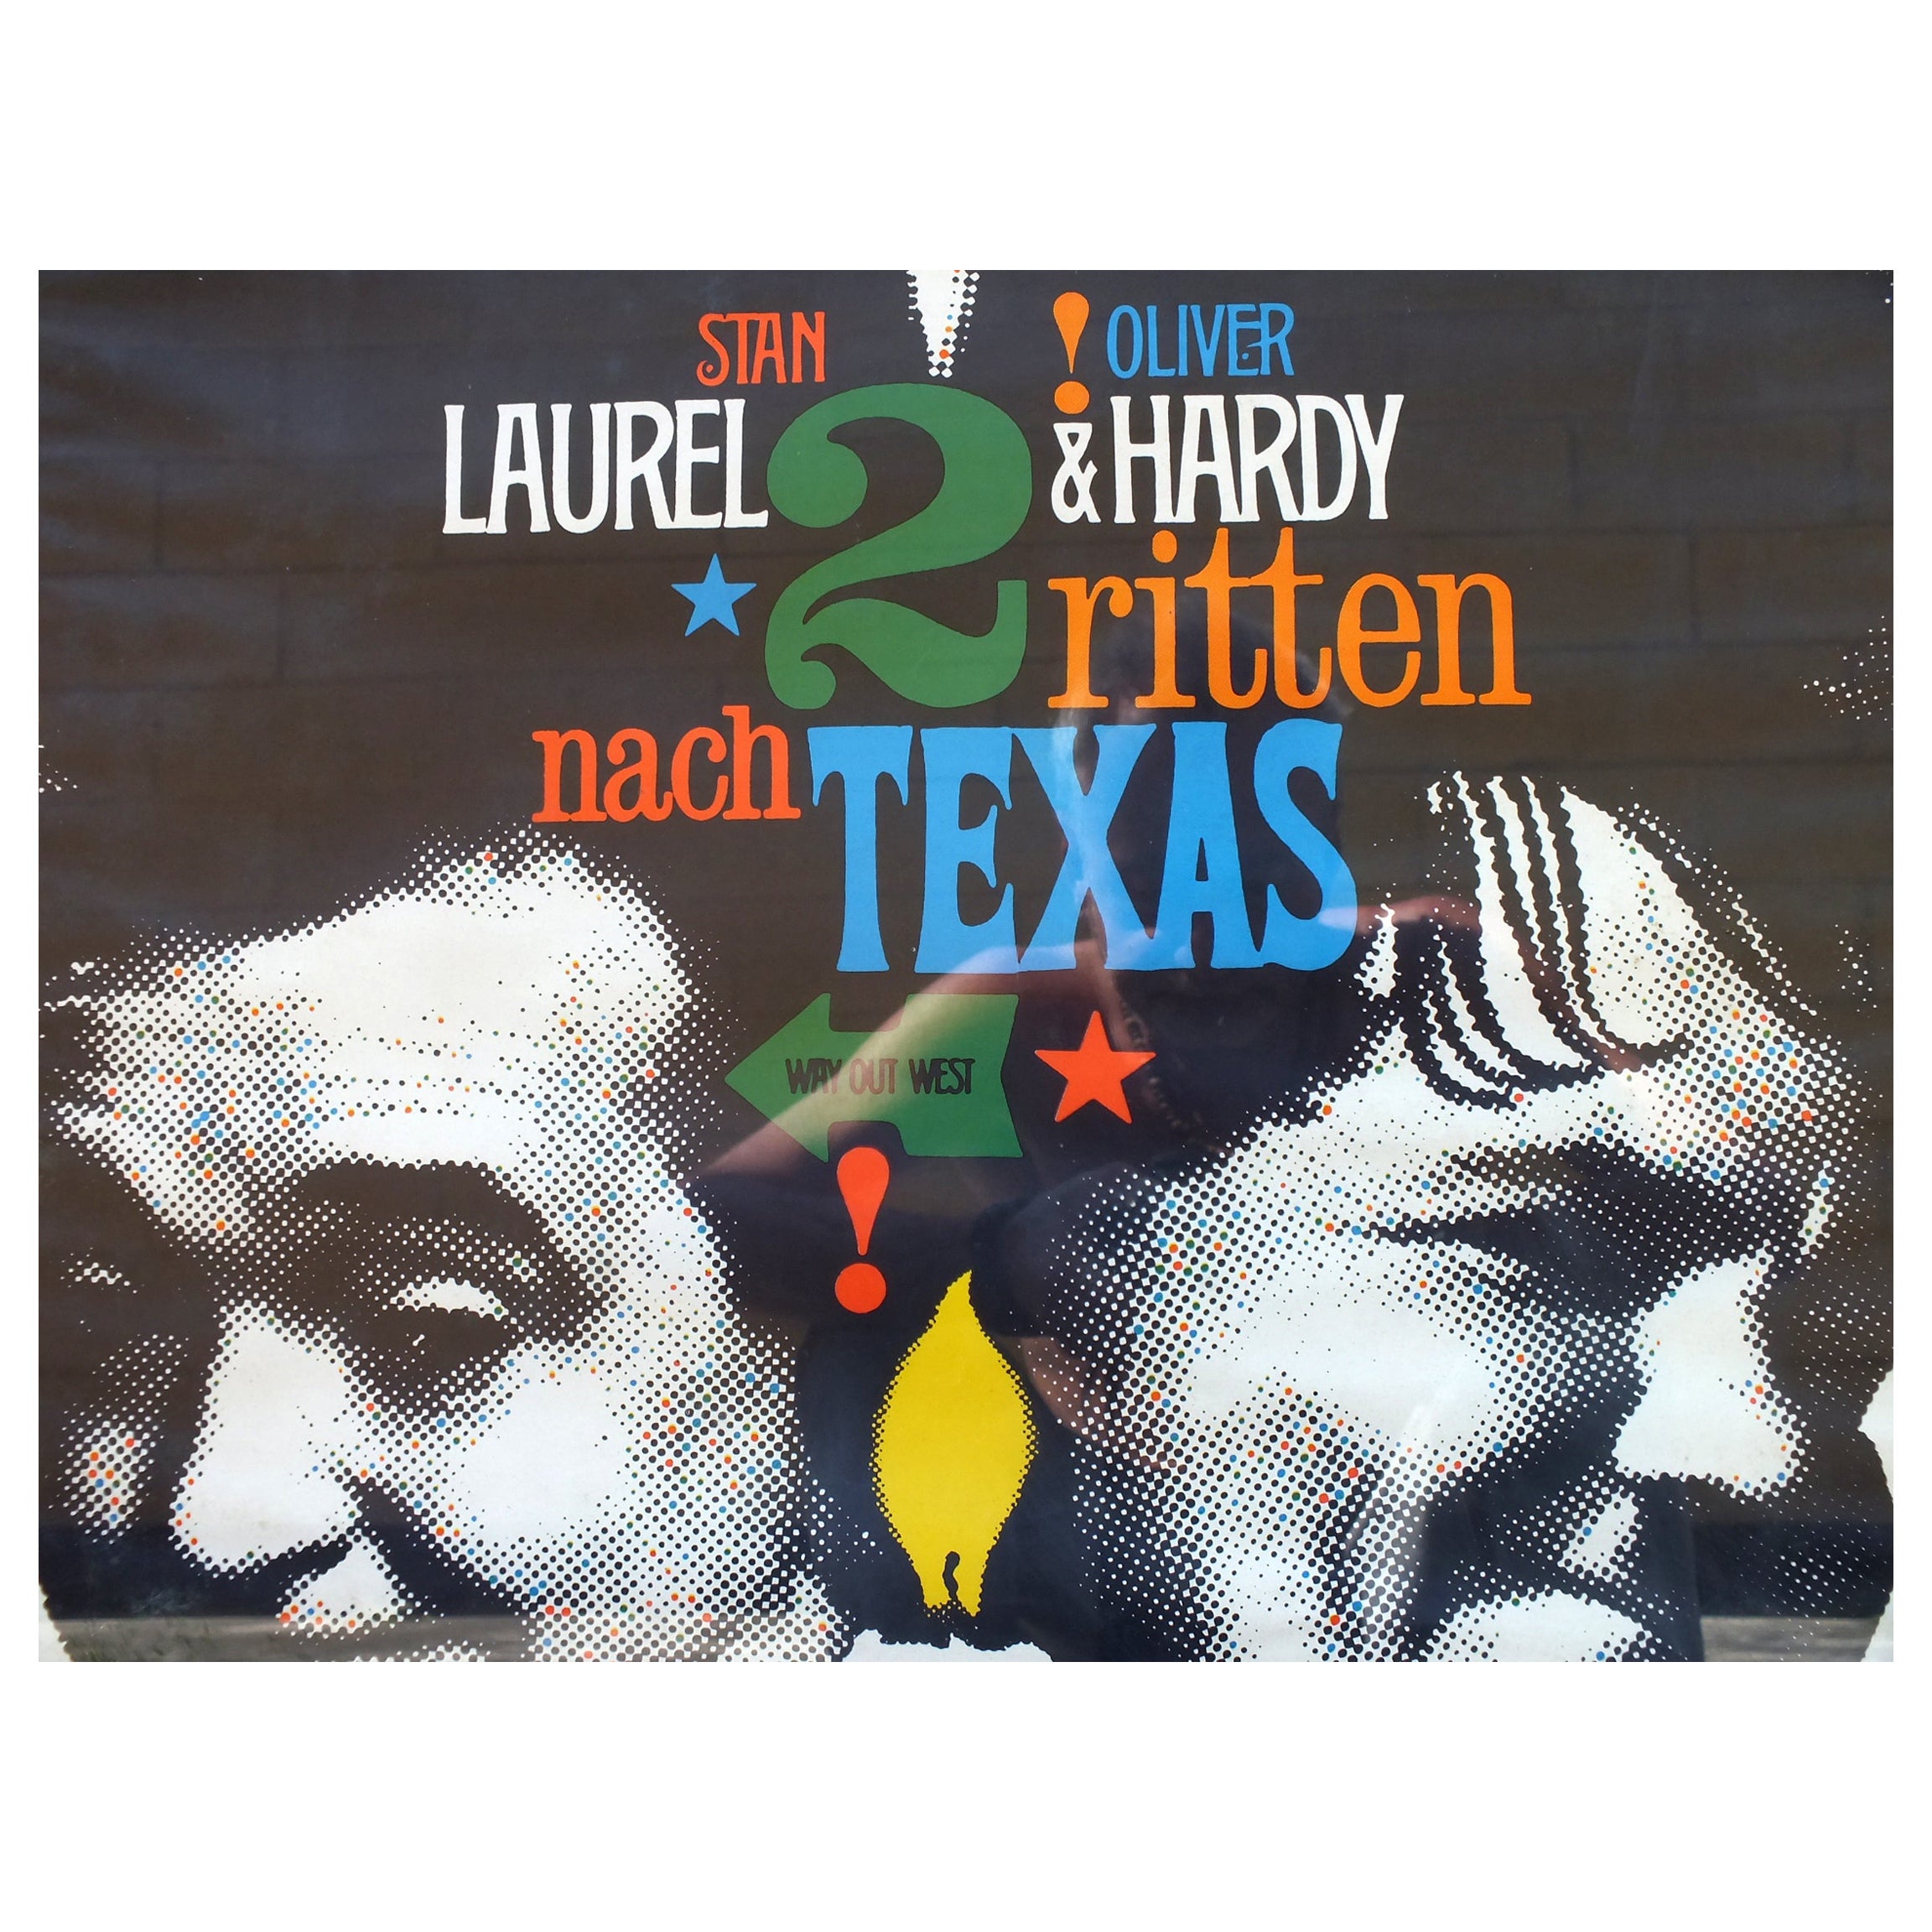  Laurel&Oliver Hardy 2 ritten nach texas/Way Out West Gunther Kieser '60 movie For Sale